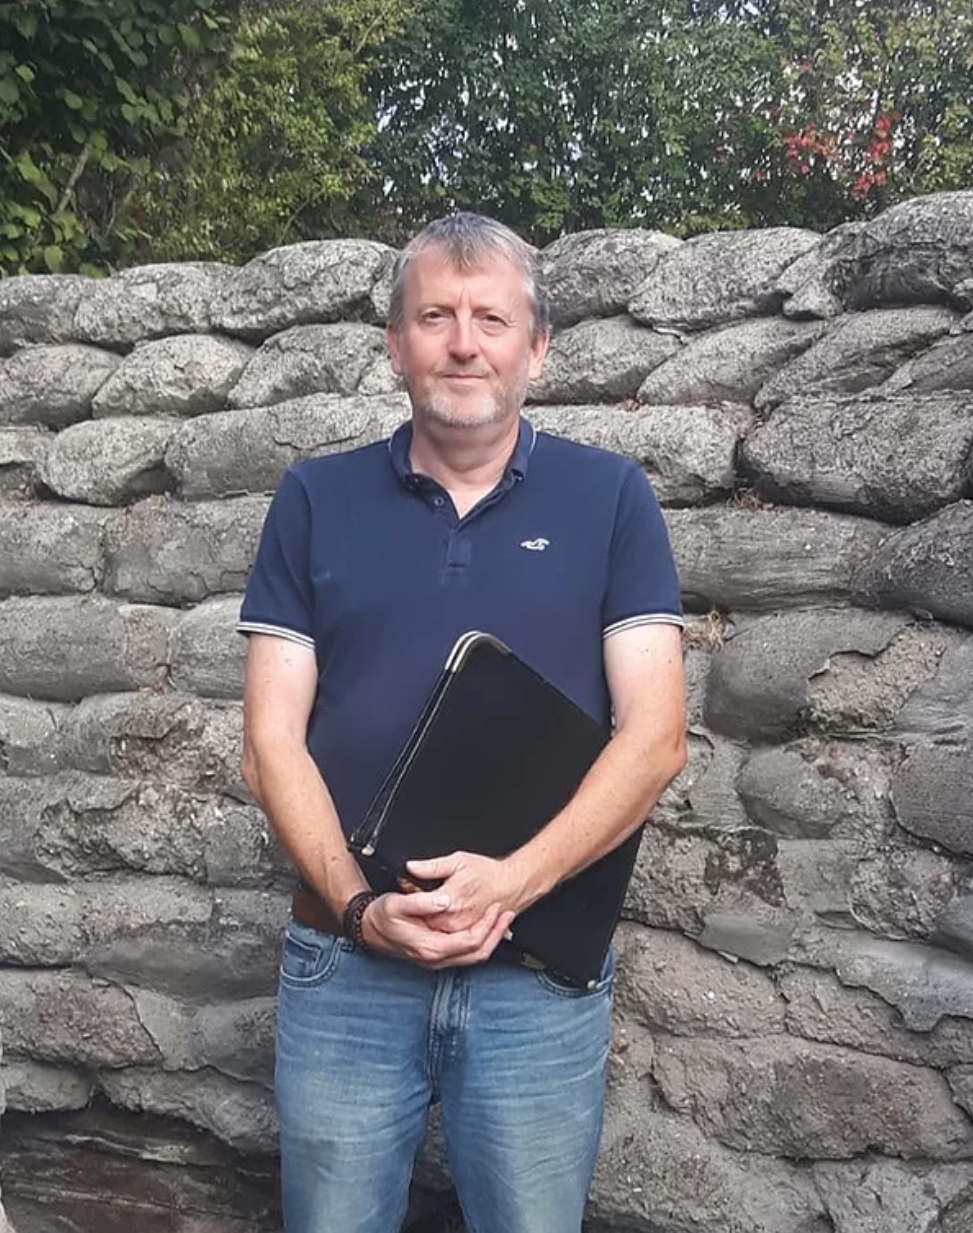 Roger Steward guide of Ypres Battlefield Tours